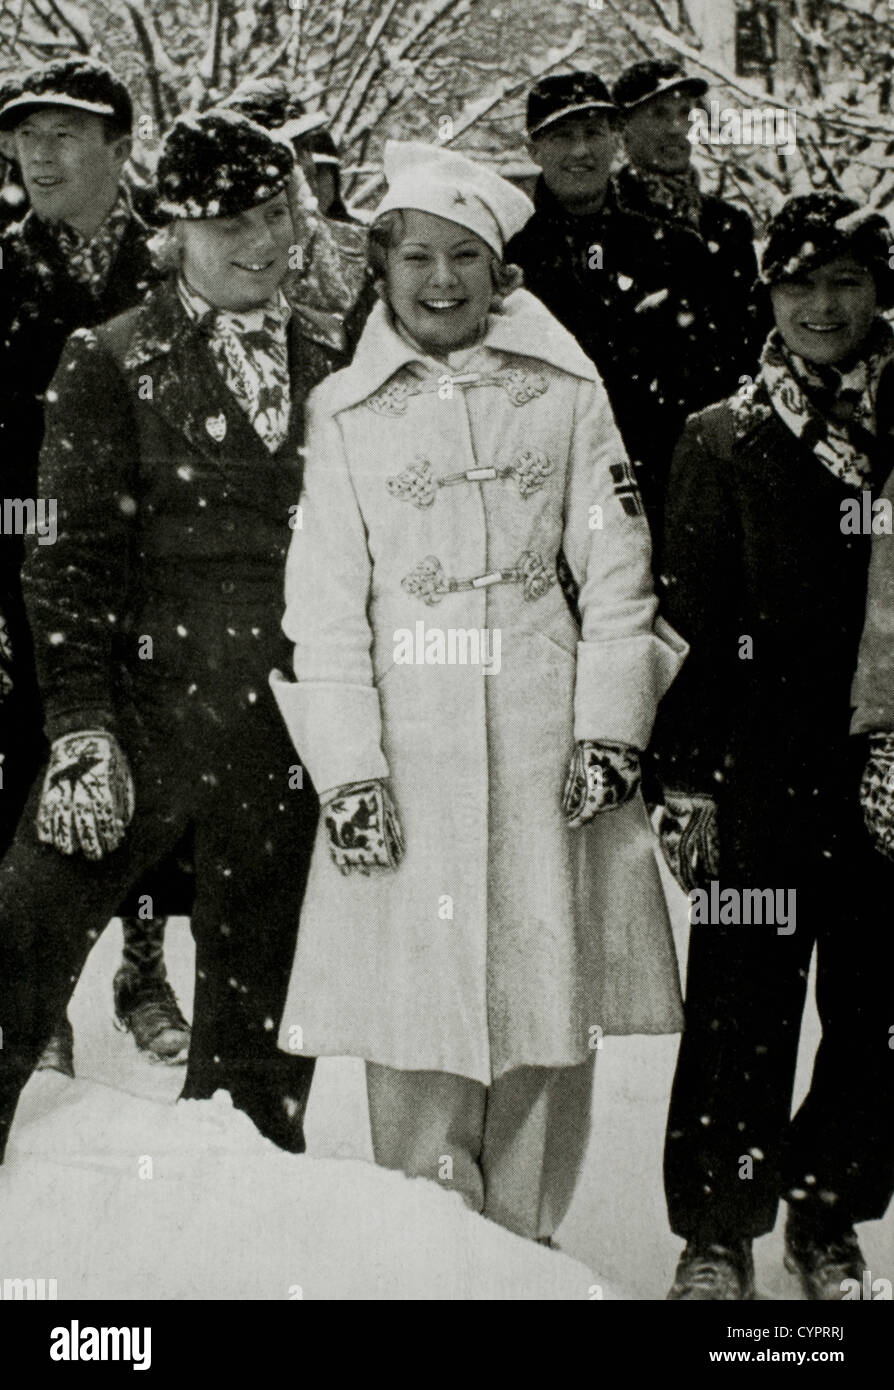 Sonja Henie, Figure Skater, at 1936 Winter Olympic Games, Garmisch-Partenkirchen, Germany Stock Photo